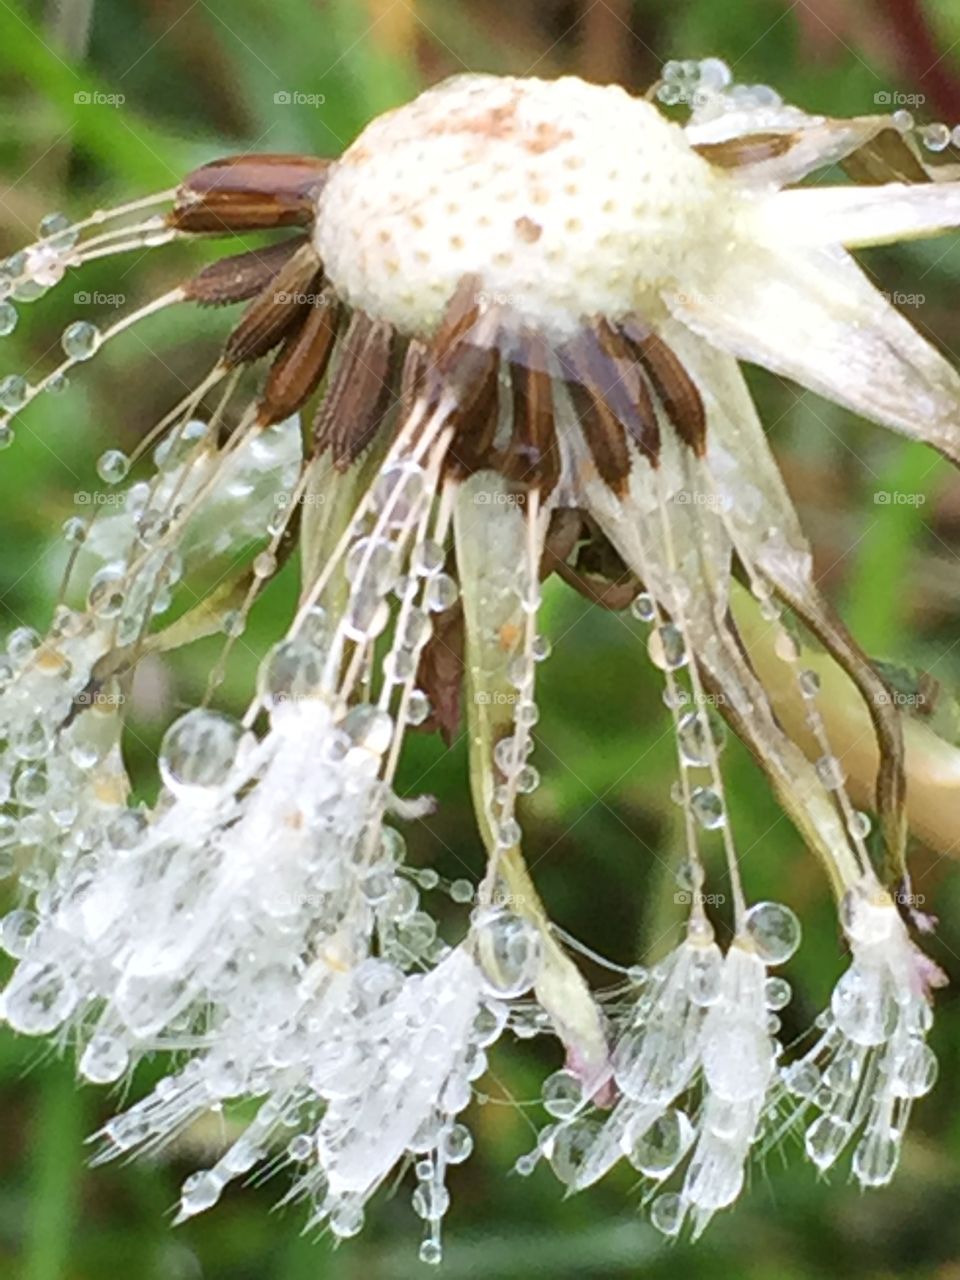 Dandelion after rain